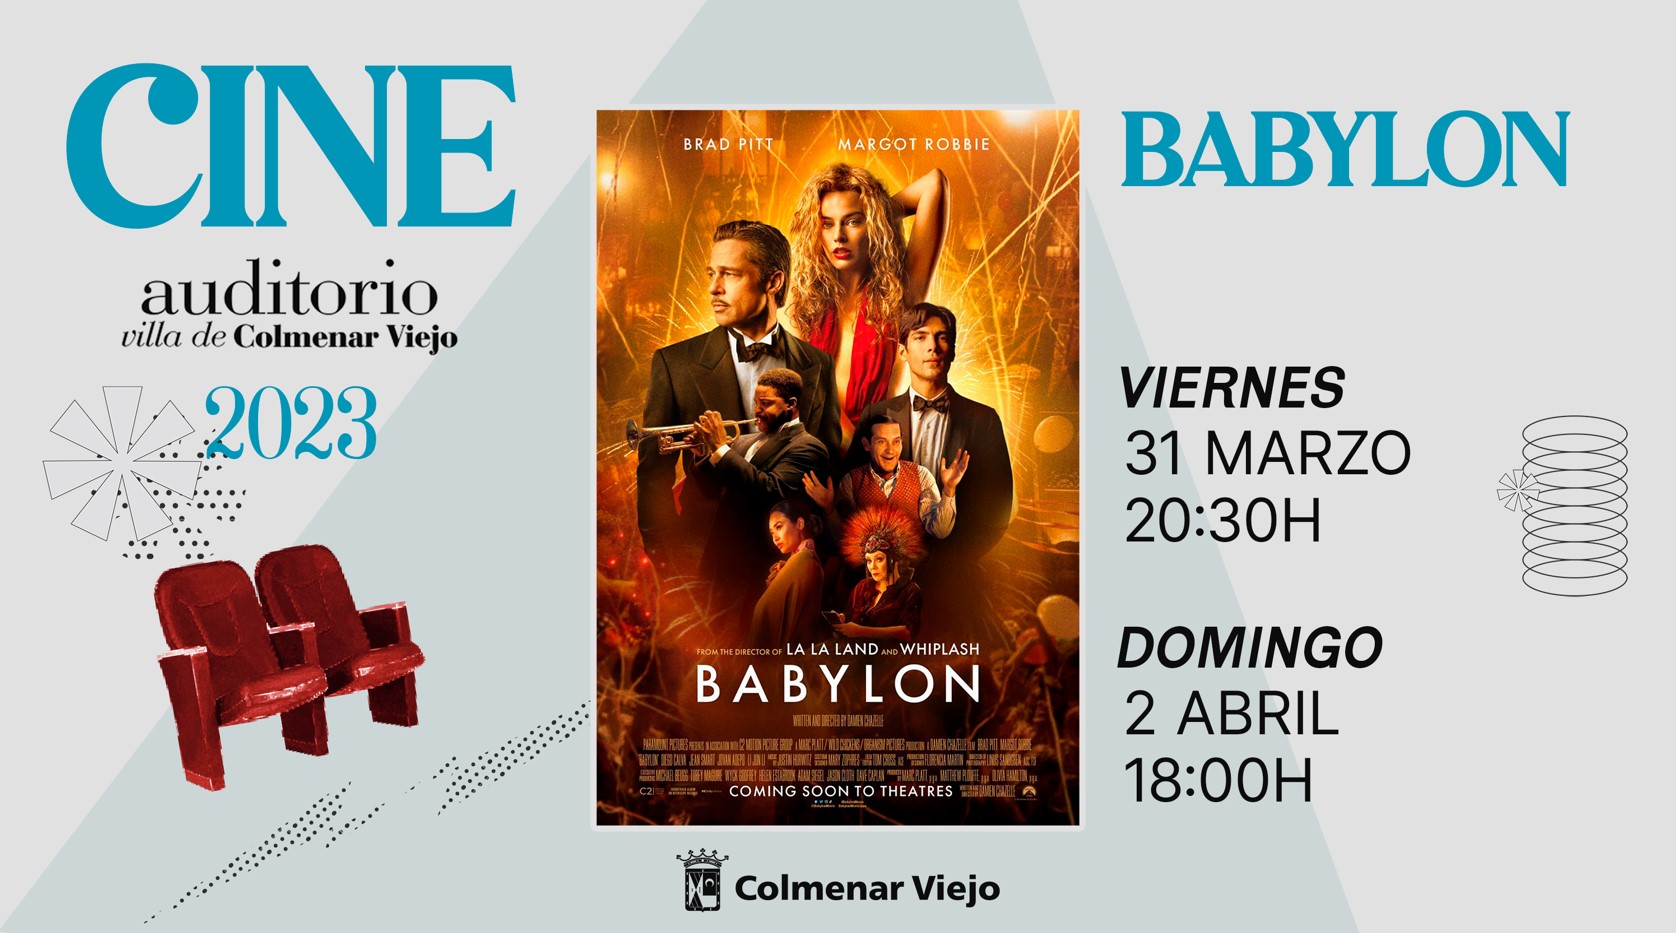 Cine_Auditorio_Babylon.jpg